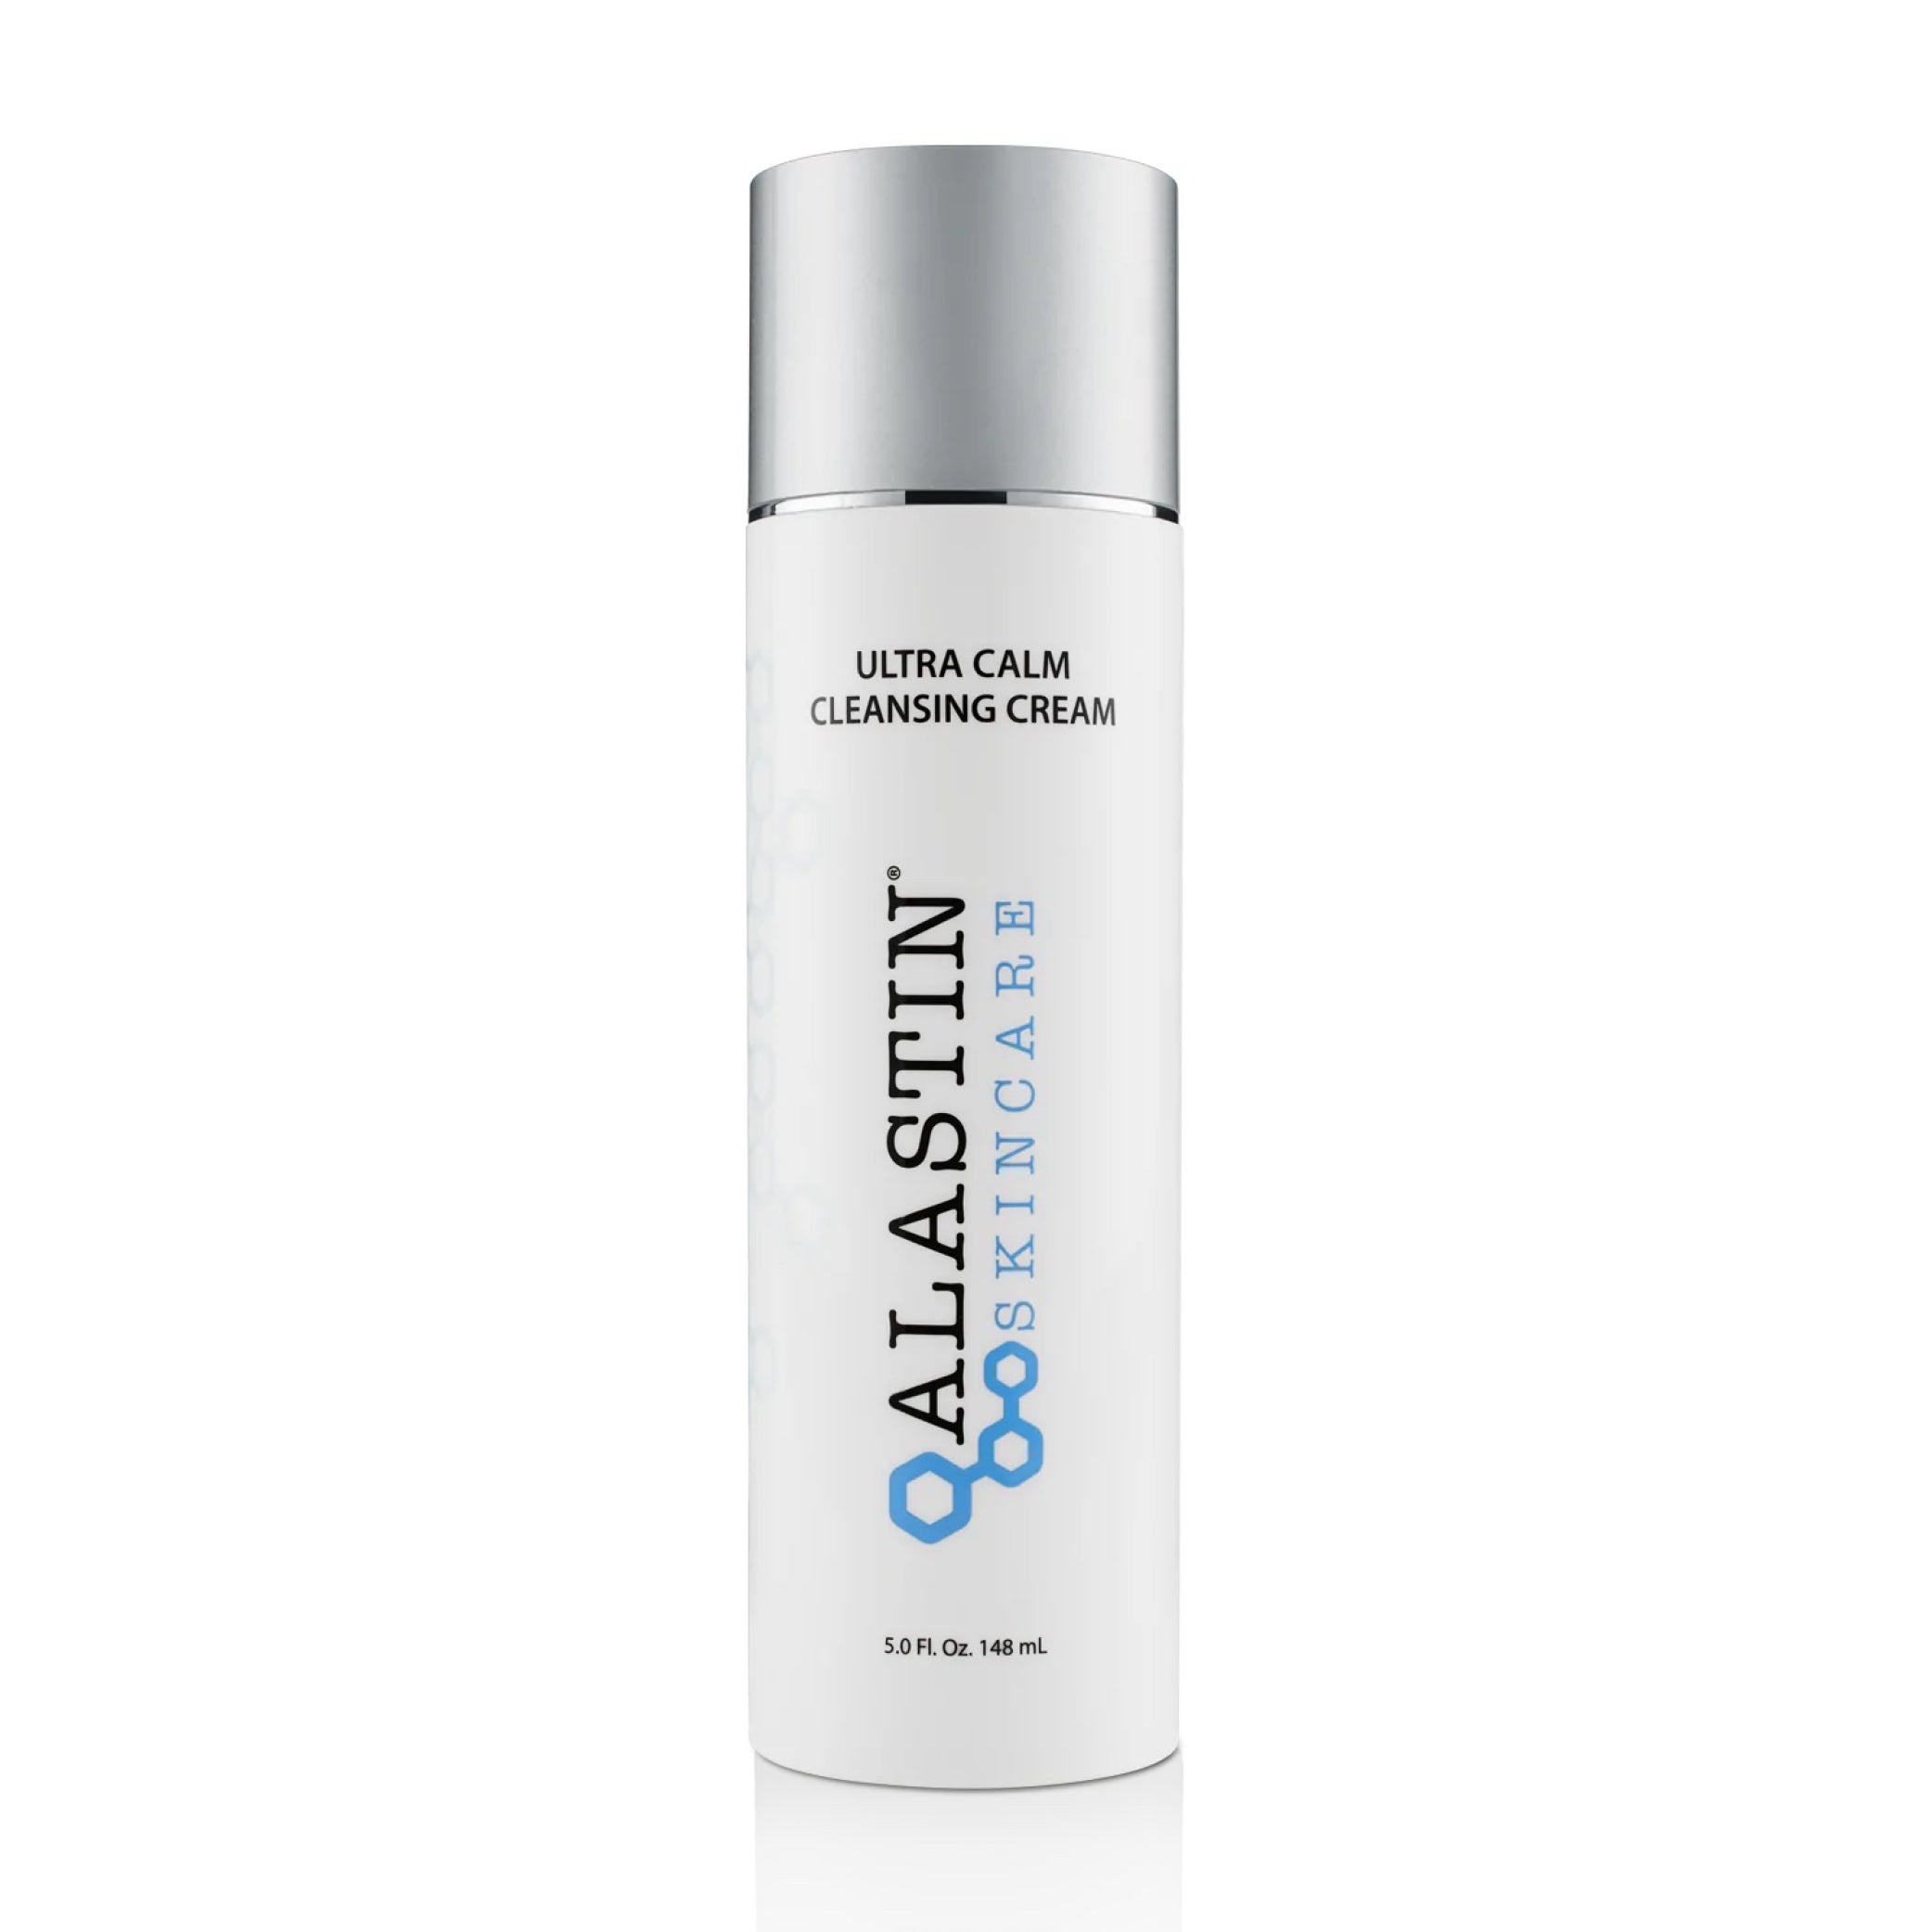 A 148ml bottle of Alastin Ultra Calm Cleansing Cream